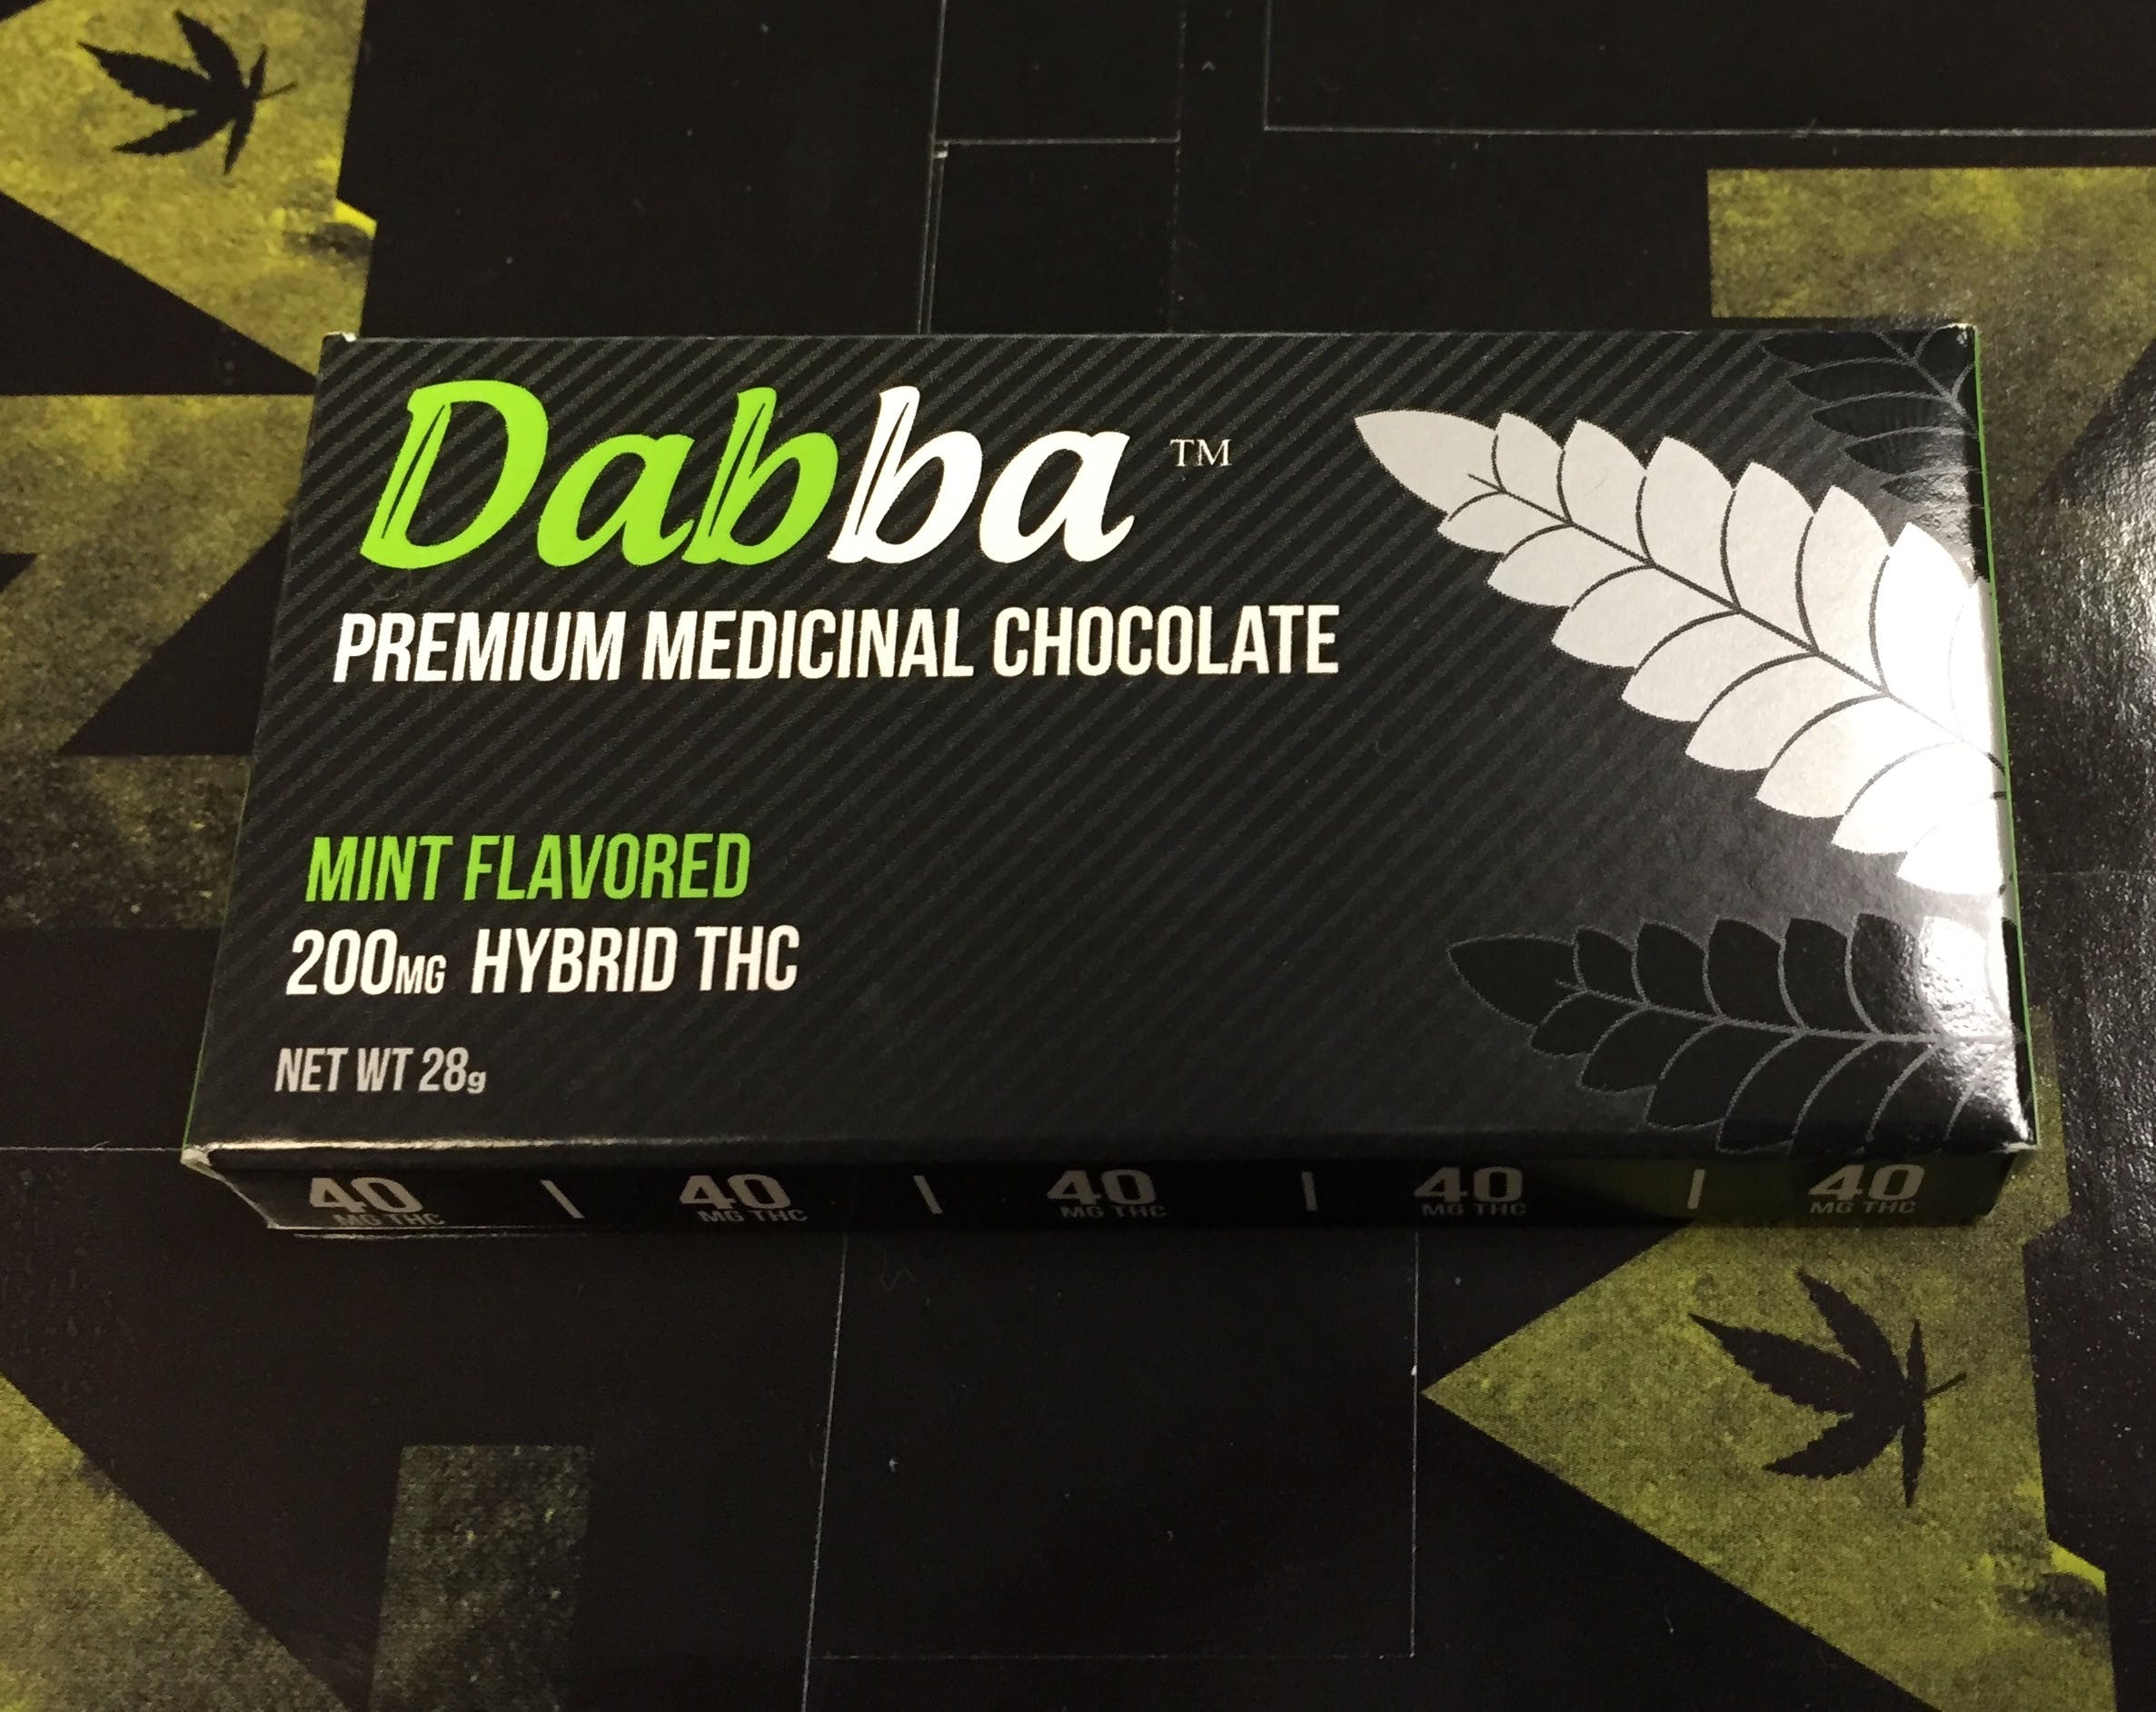 edible-dabba-chocolate-200mg-tax-included